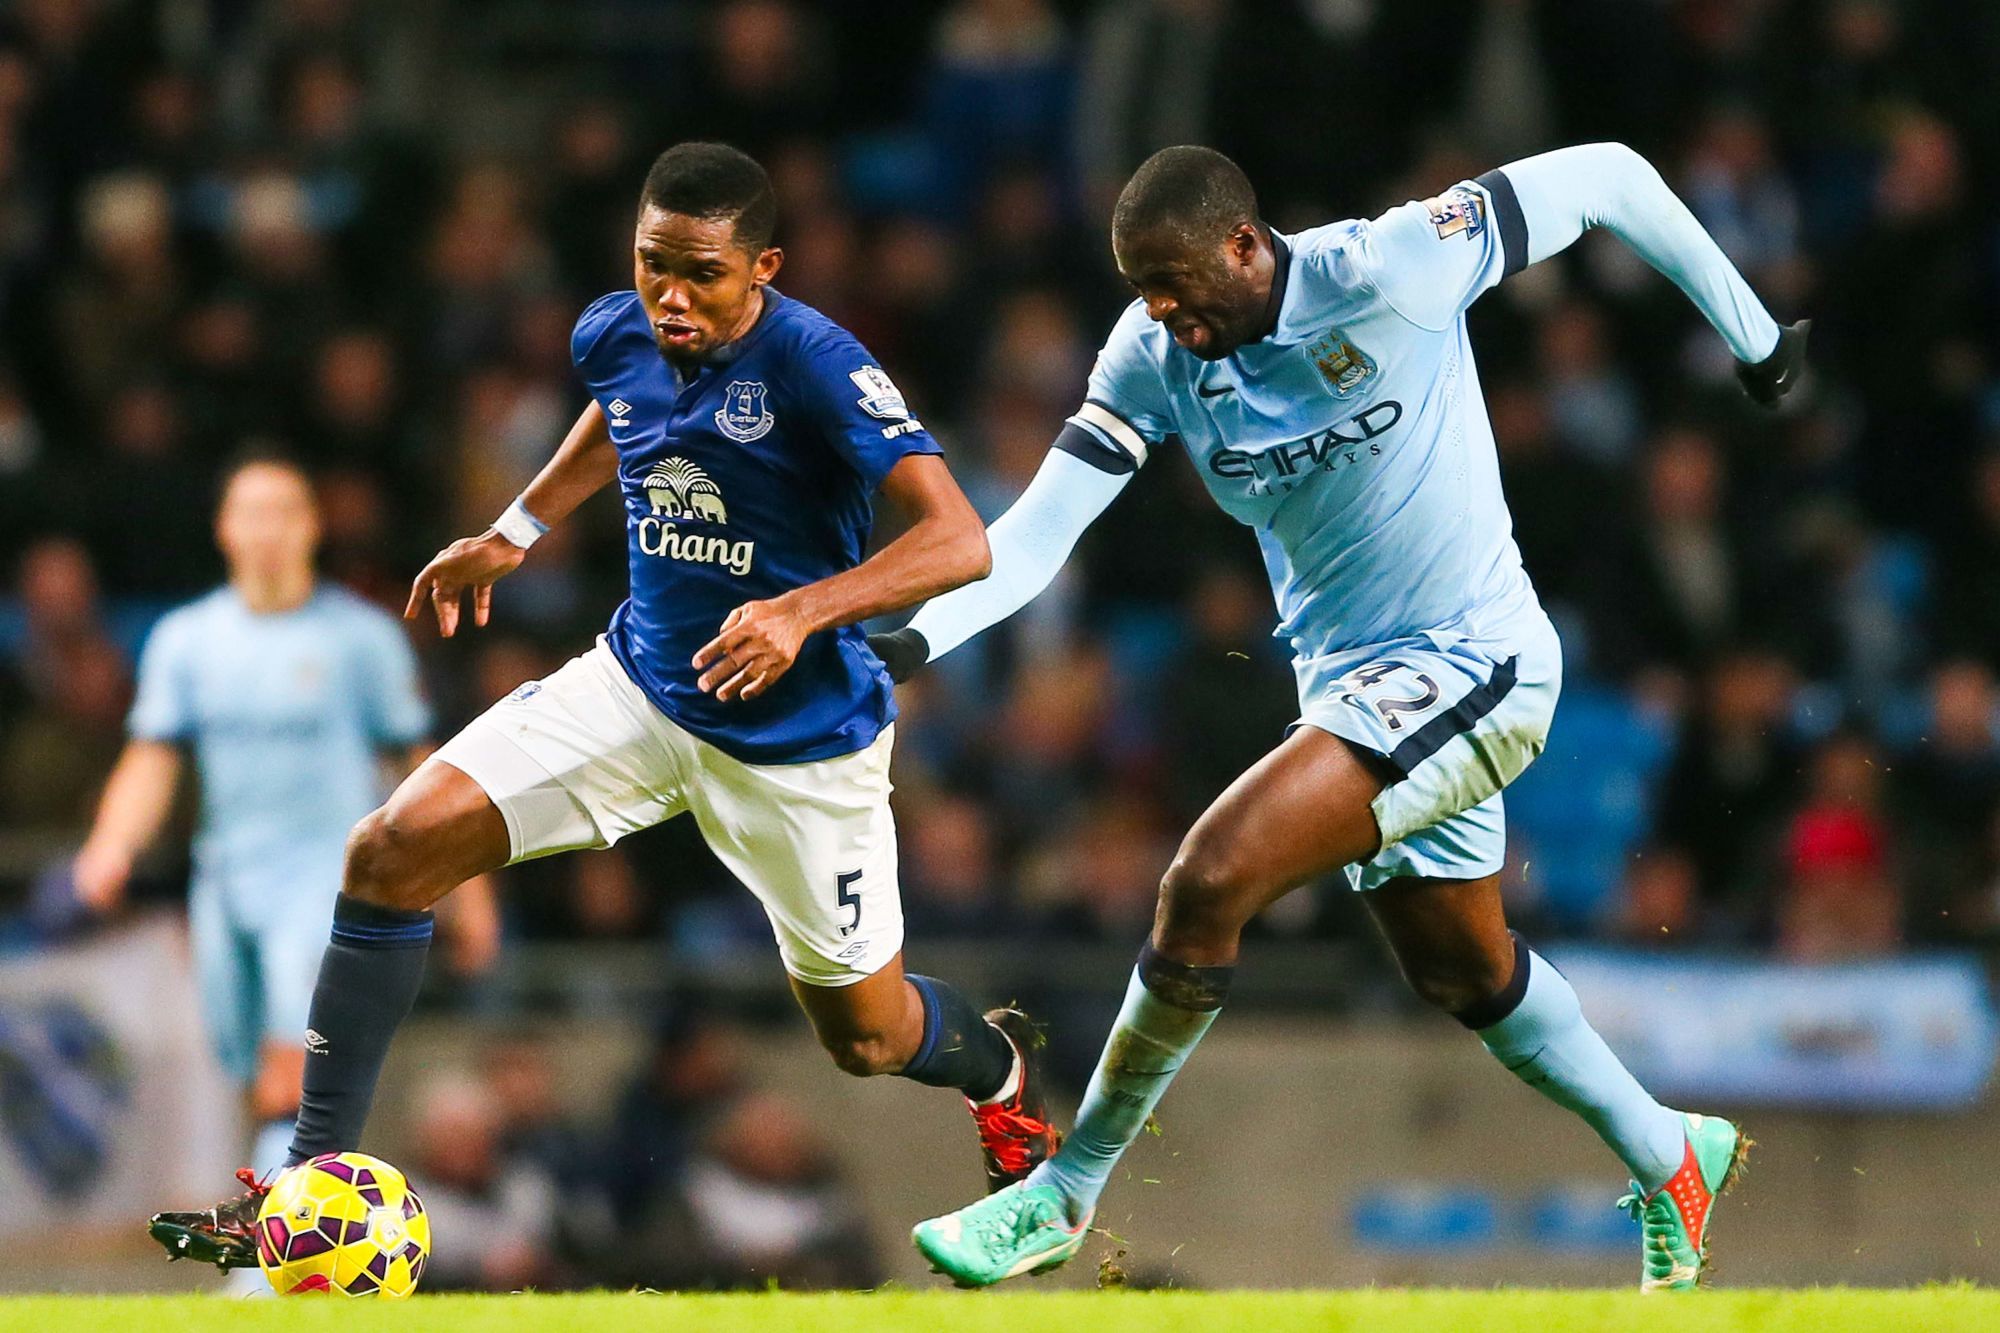 Samuel Eto'o / Yaya Toure - 06.12.2014 - Manchester City / Everton - 15eme journee de Premier League
Photo